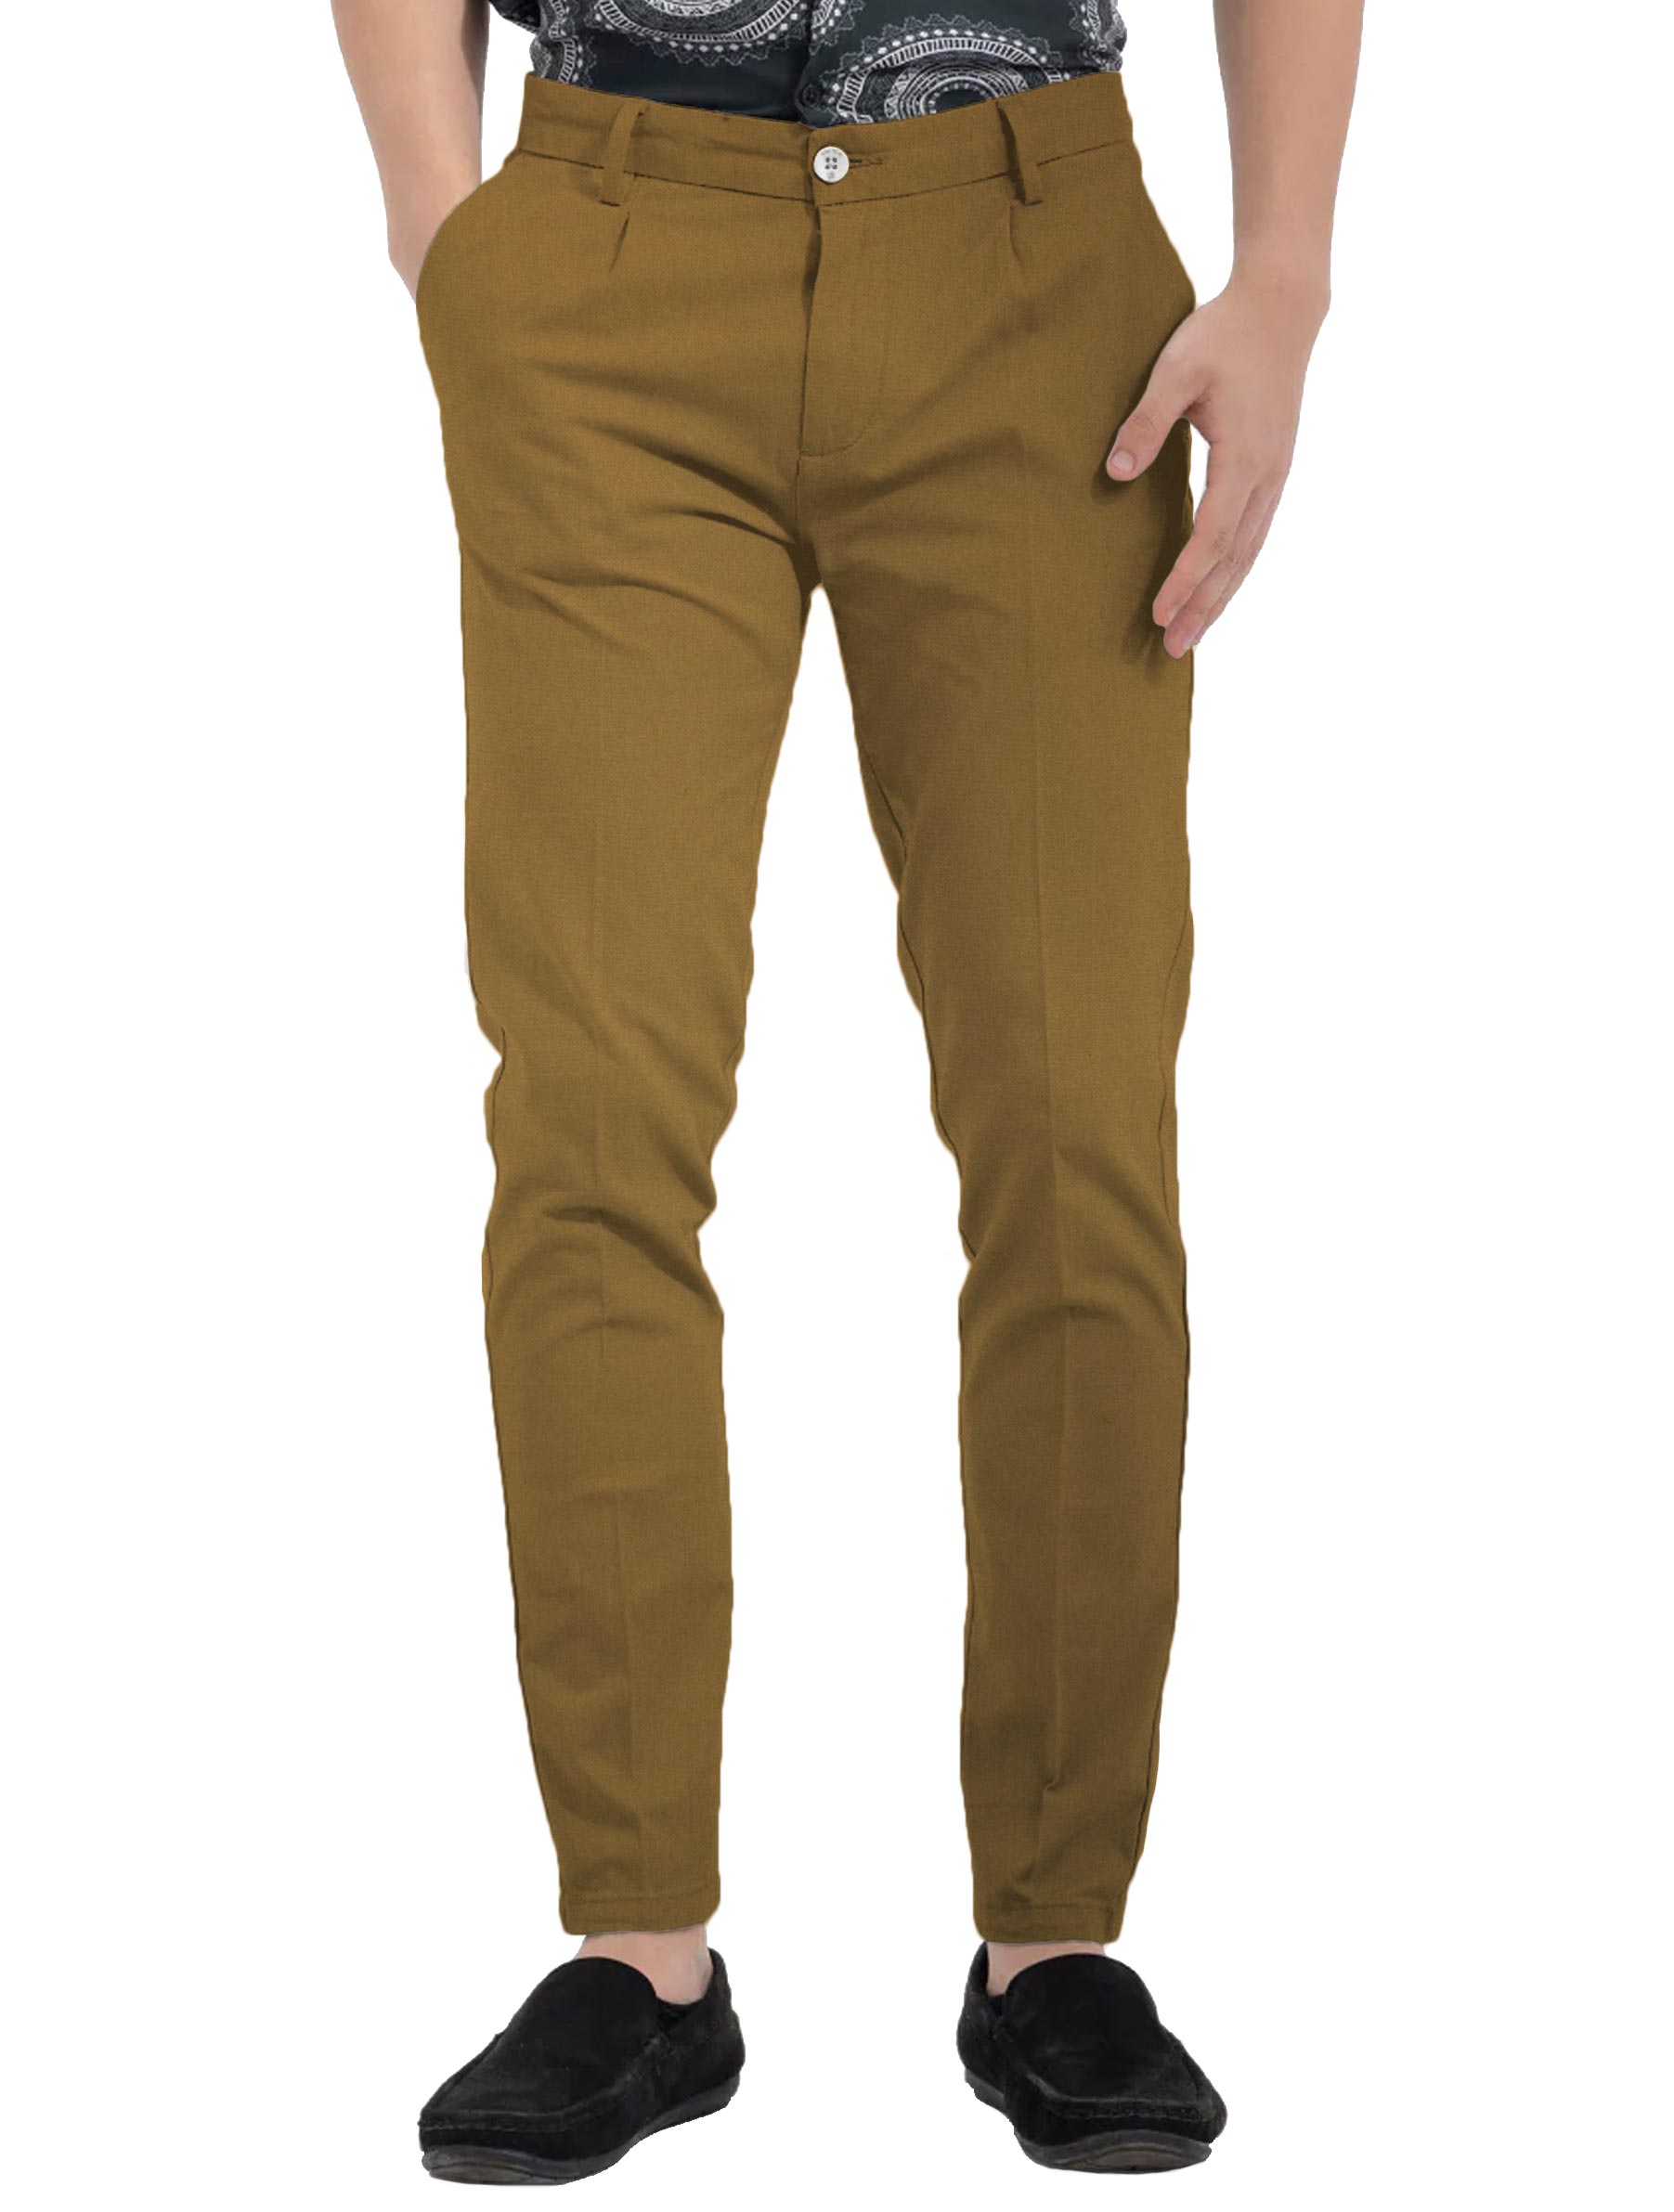 Jeans & Pants | Raymond Trouser Pant, Waist 32 | Freeup